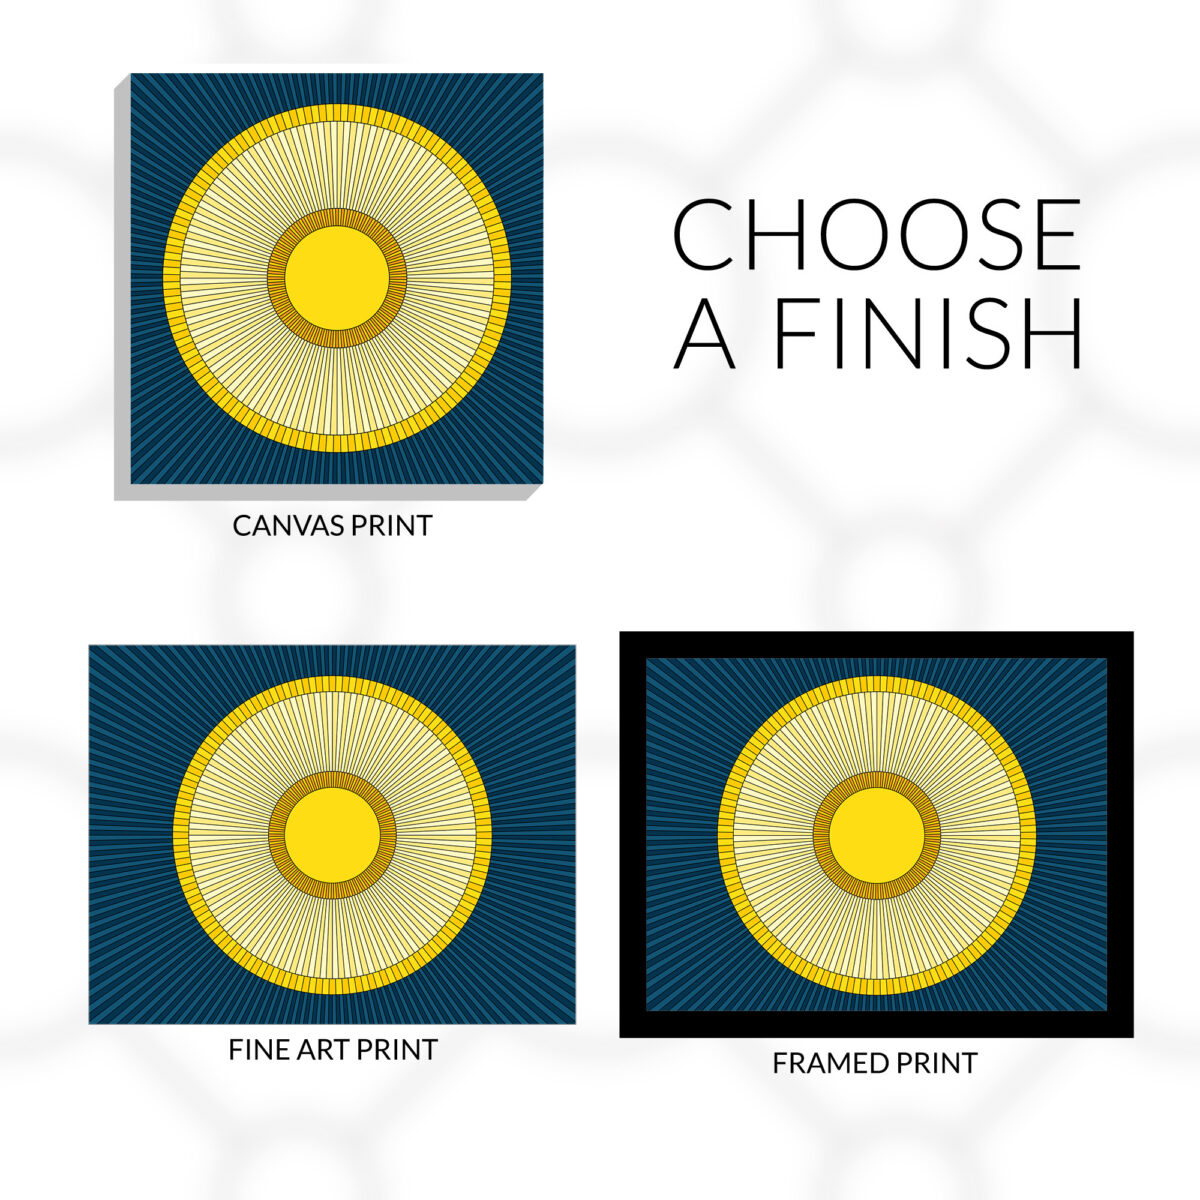 Solstice design choose a finish. Canvas print, fine art print, or framed fine art print.